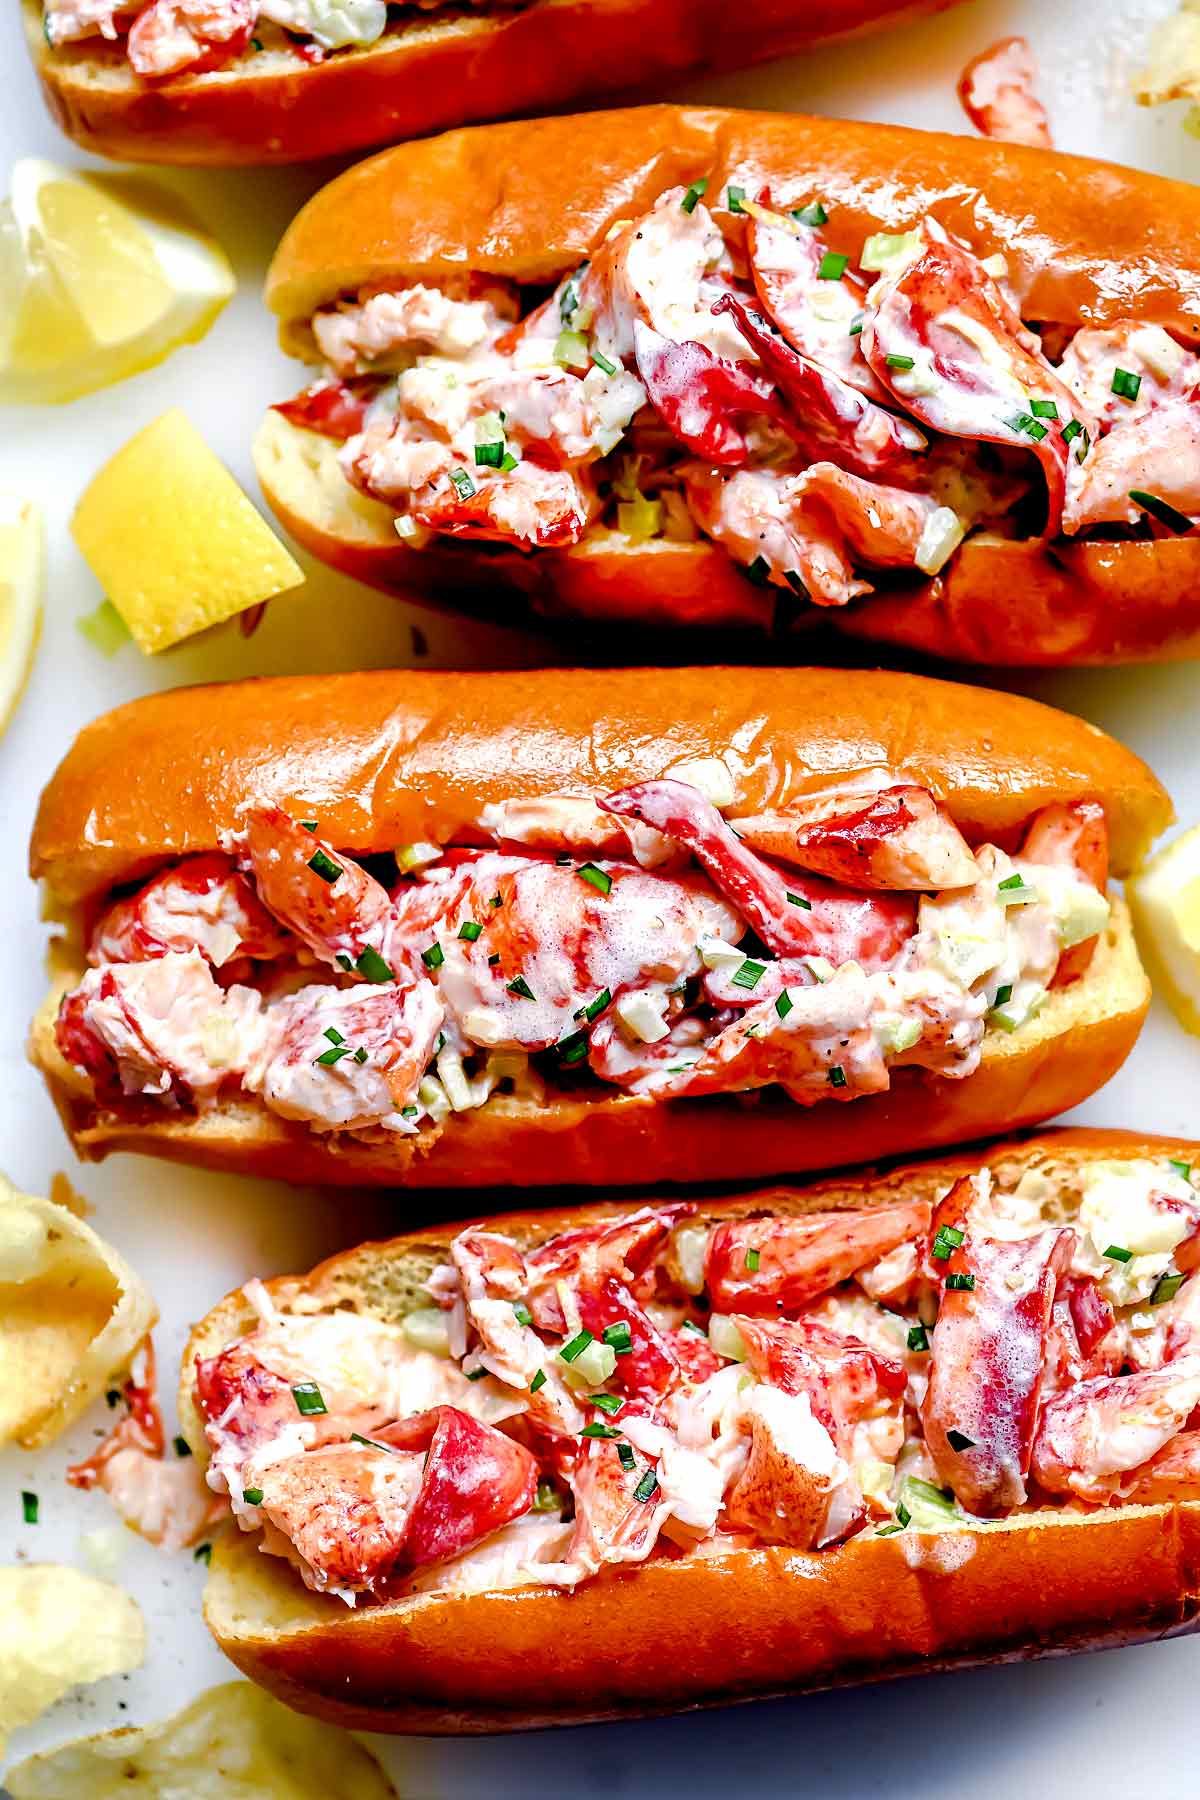 https://www.foodiecrush.com/wp-content/uploads/2020/06/Lobster-Rolls-foodiecrush.com-012.jpg